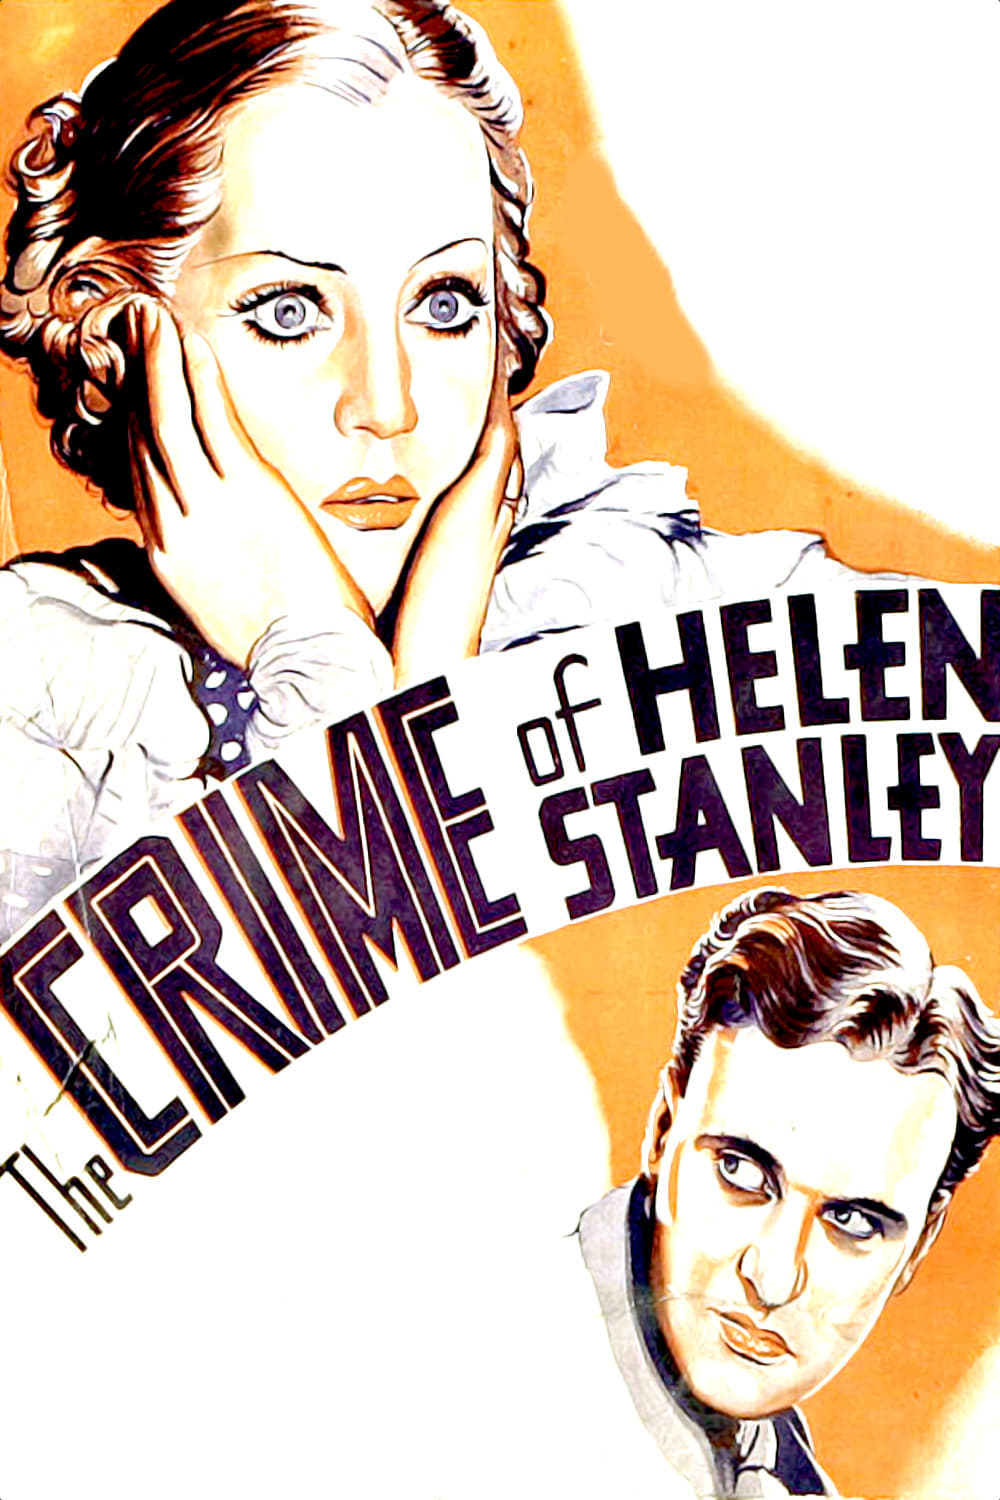 The Crime of Helen Stanley (1934)